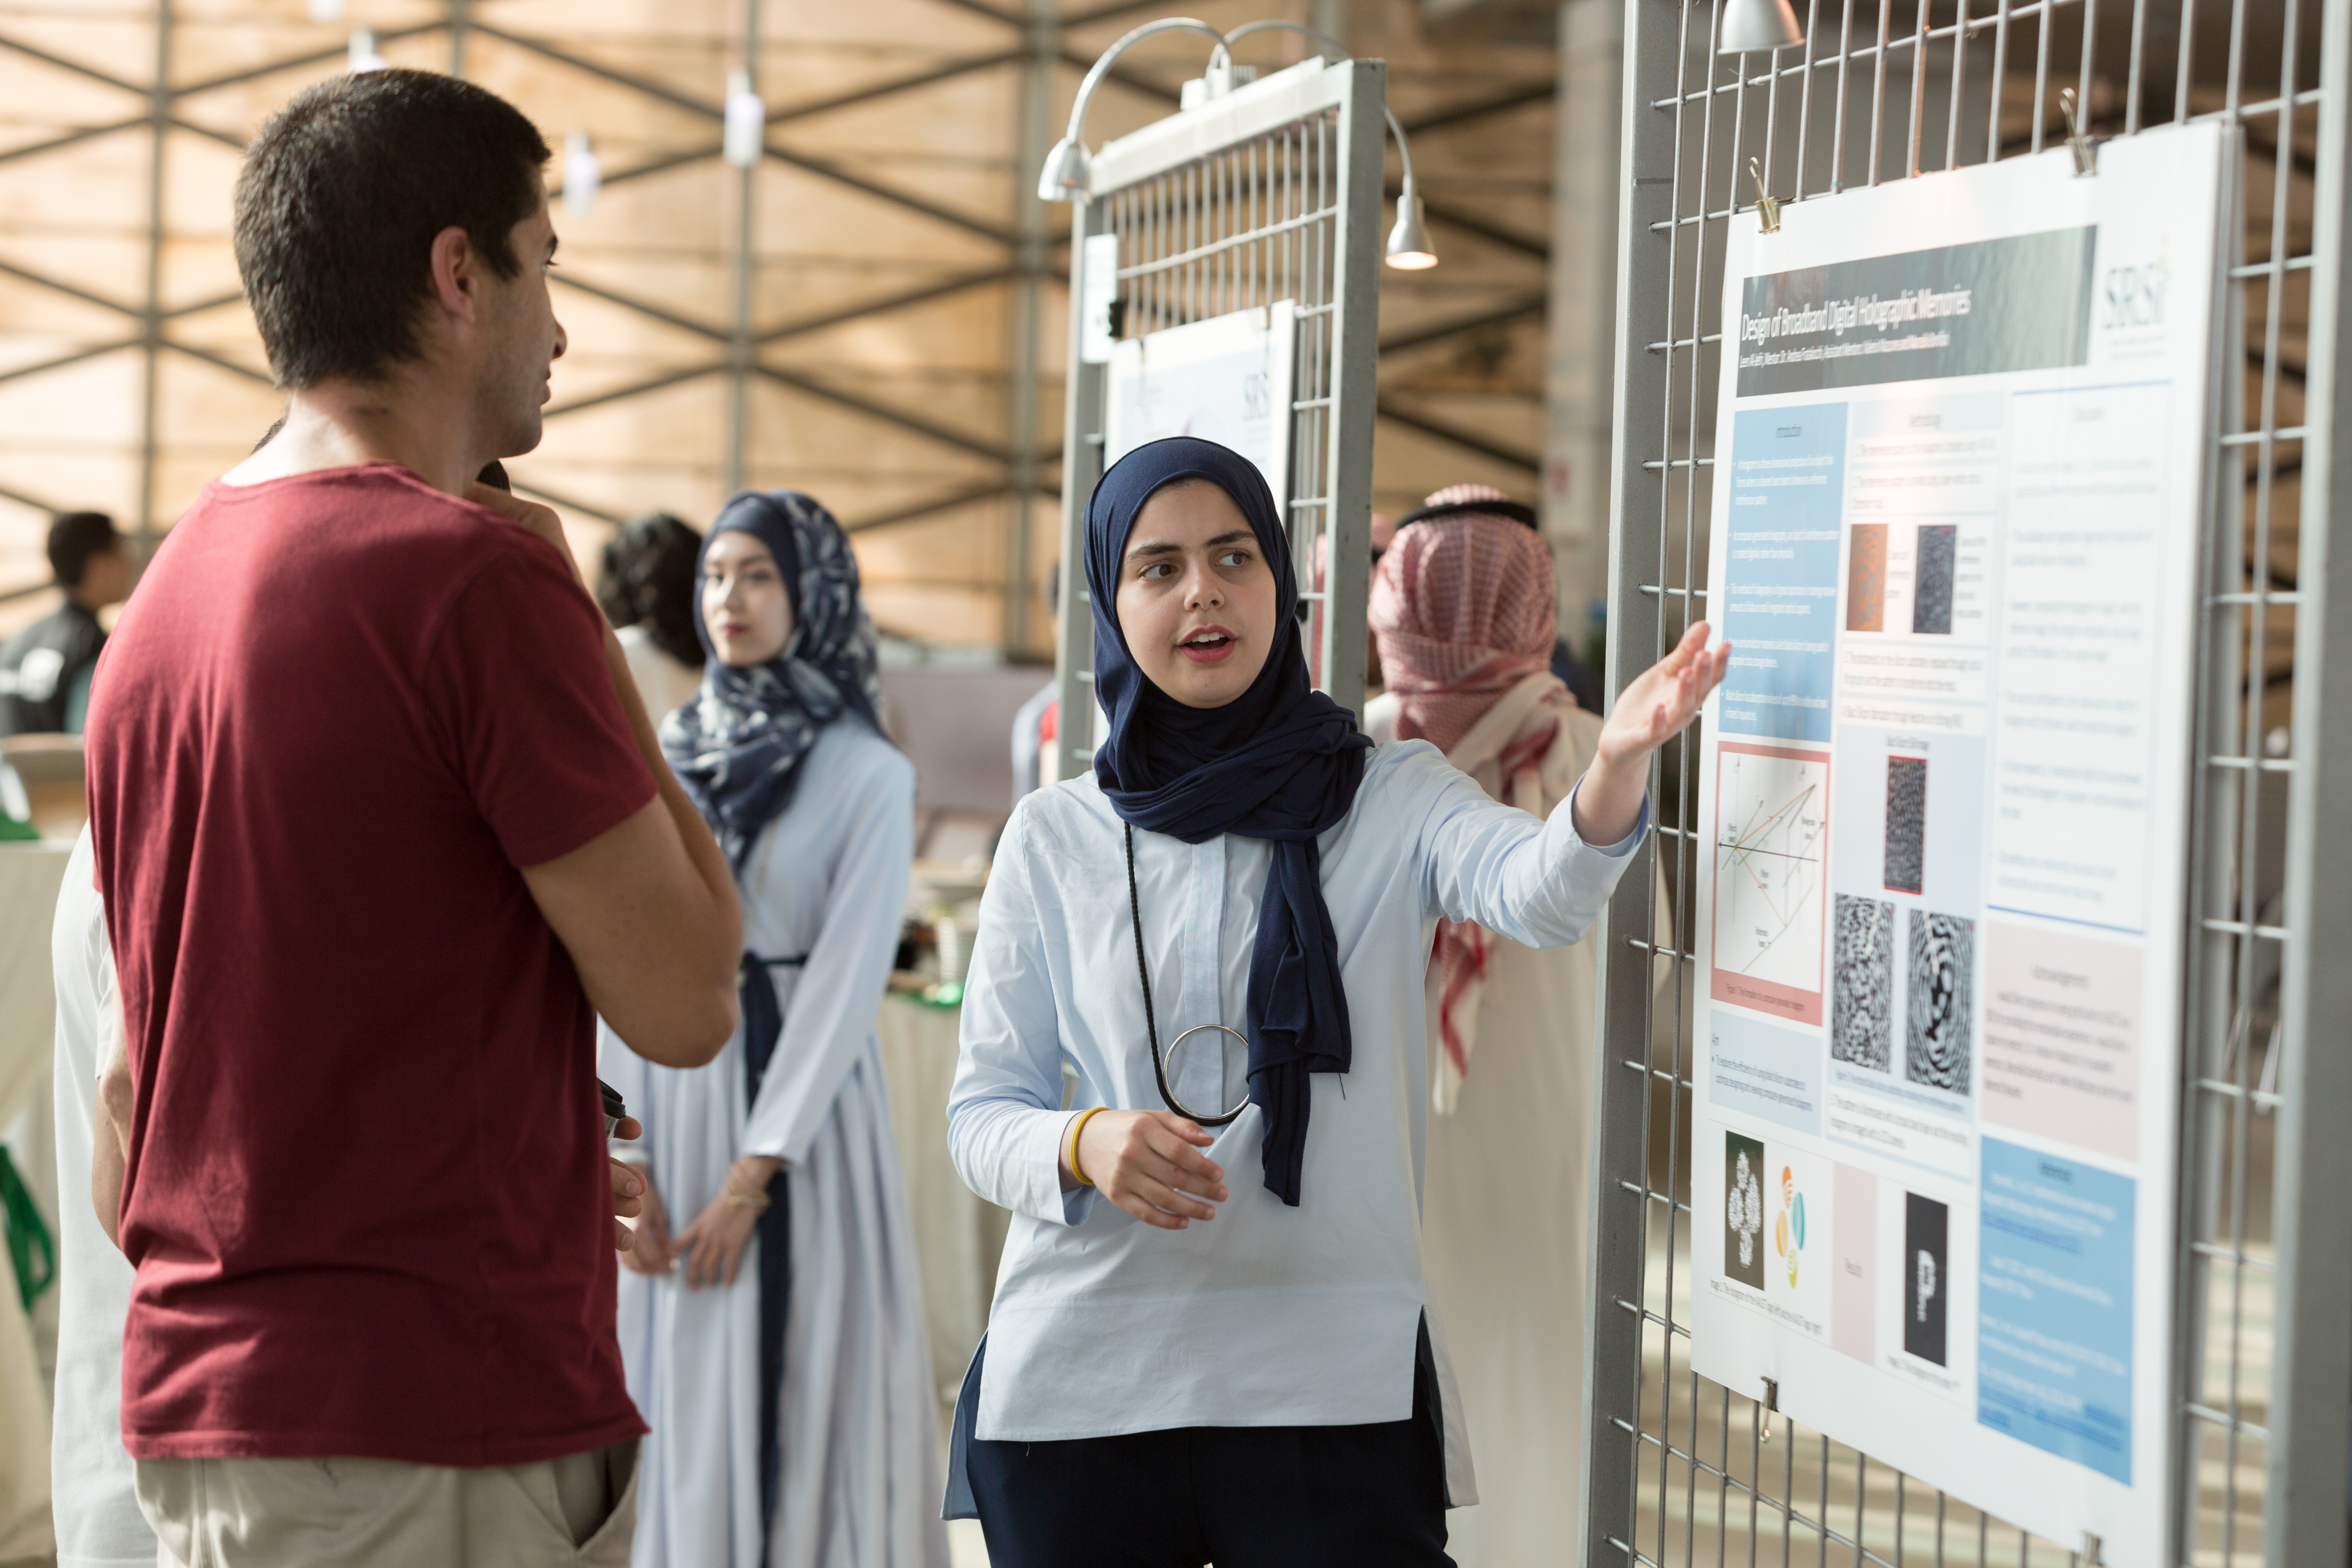 The King Abdullah University of Science & Technology KAUST Internship programme